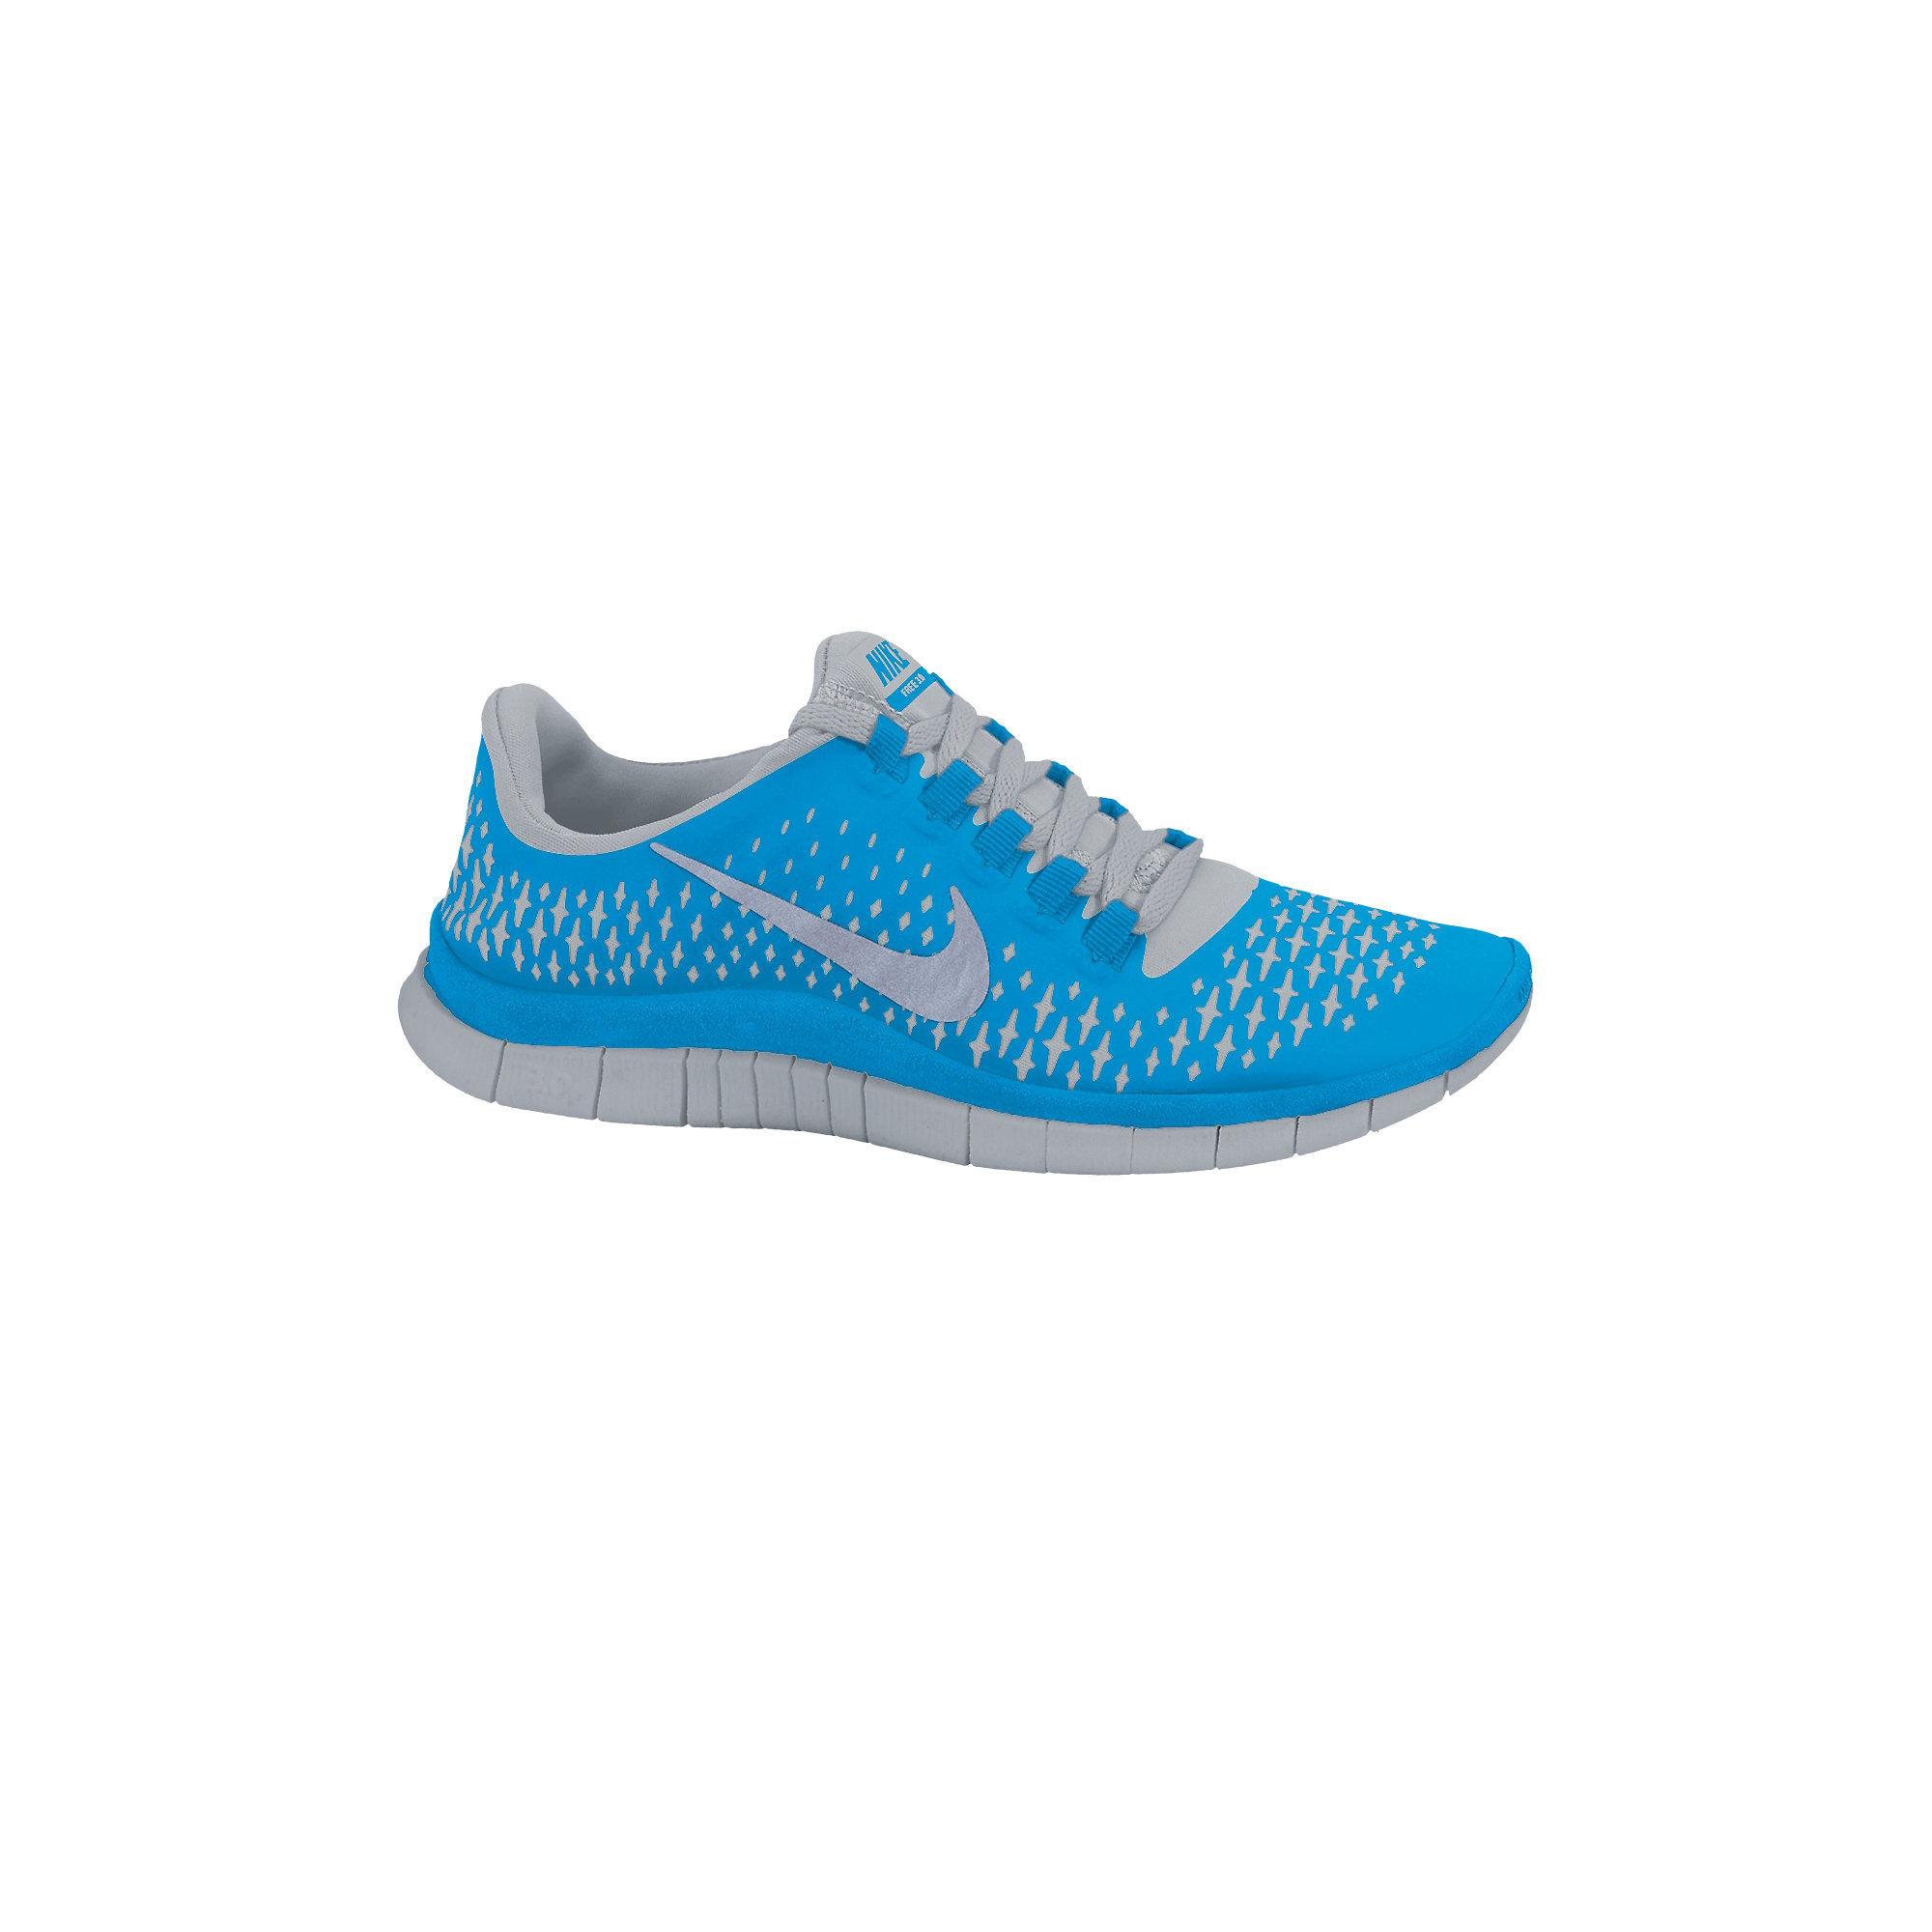 Foto Zapatillas Nike - Free 3.0 V4 - Otoño12 - UK 10 Grey/Silver/Blue foto 93100